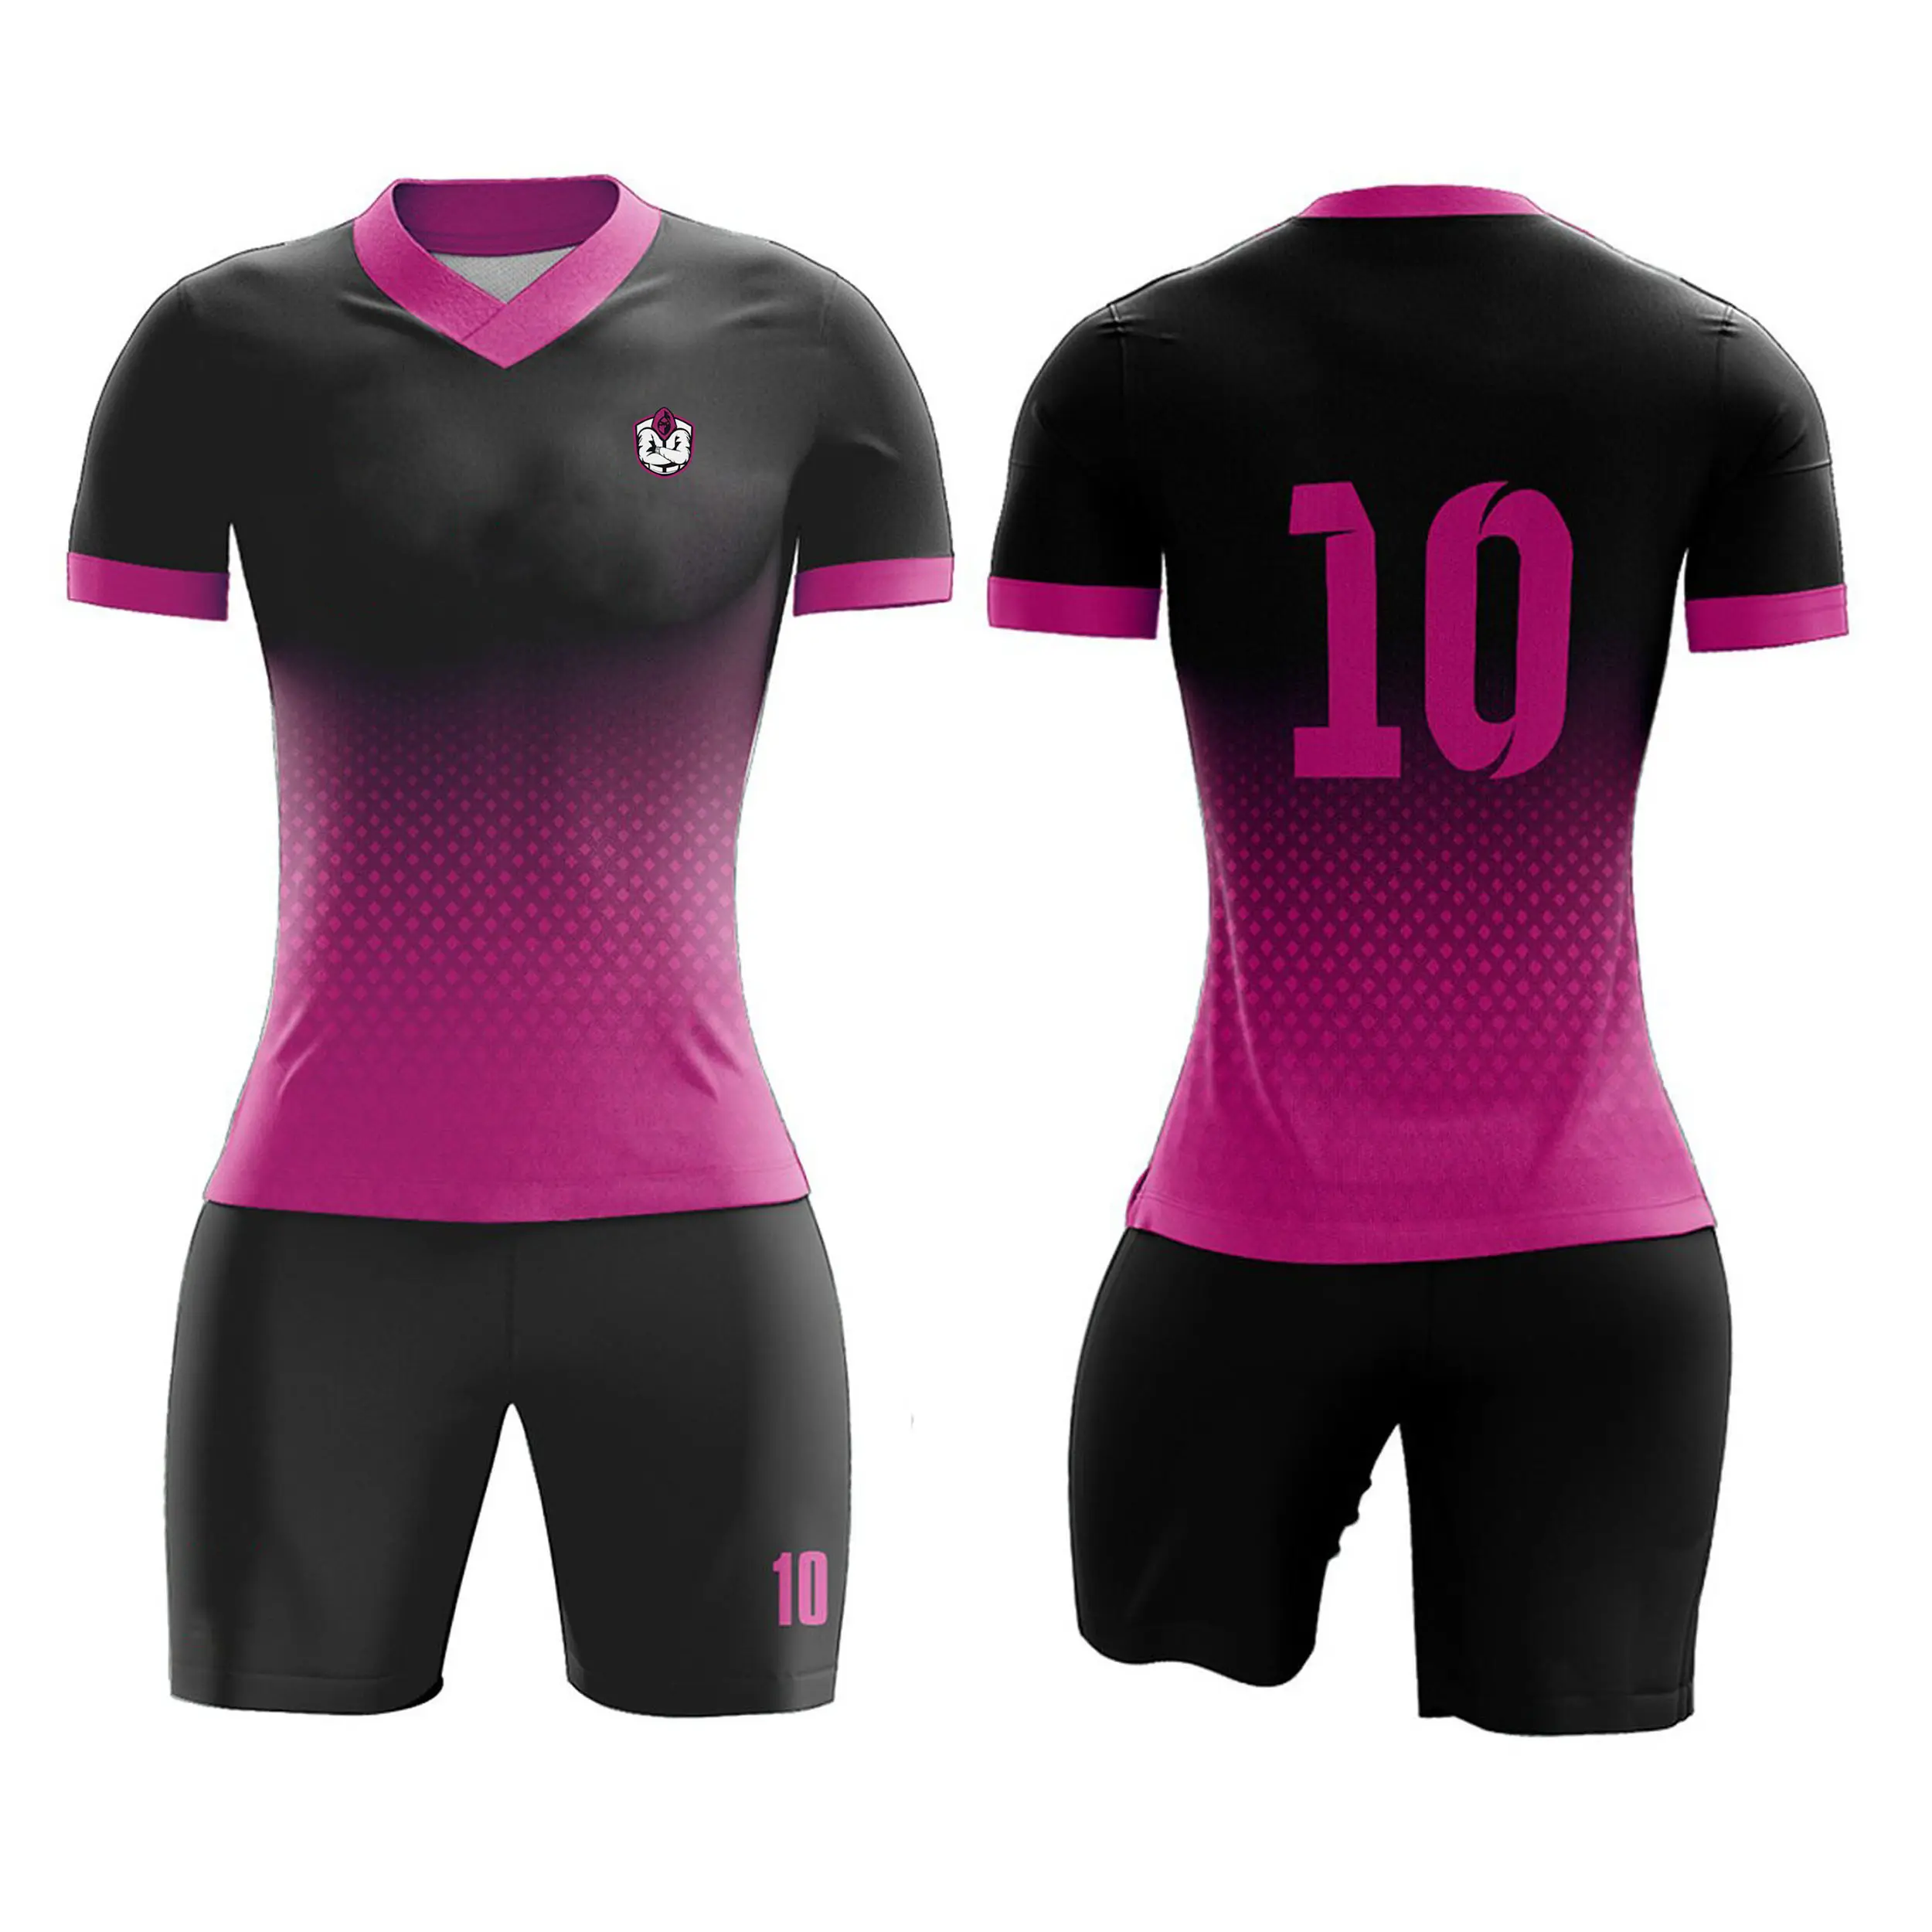 Equipe de futebol feminina, veste barato uniforme de futebol personalizado